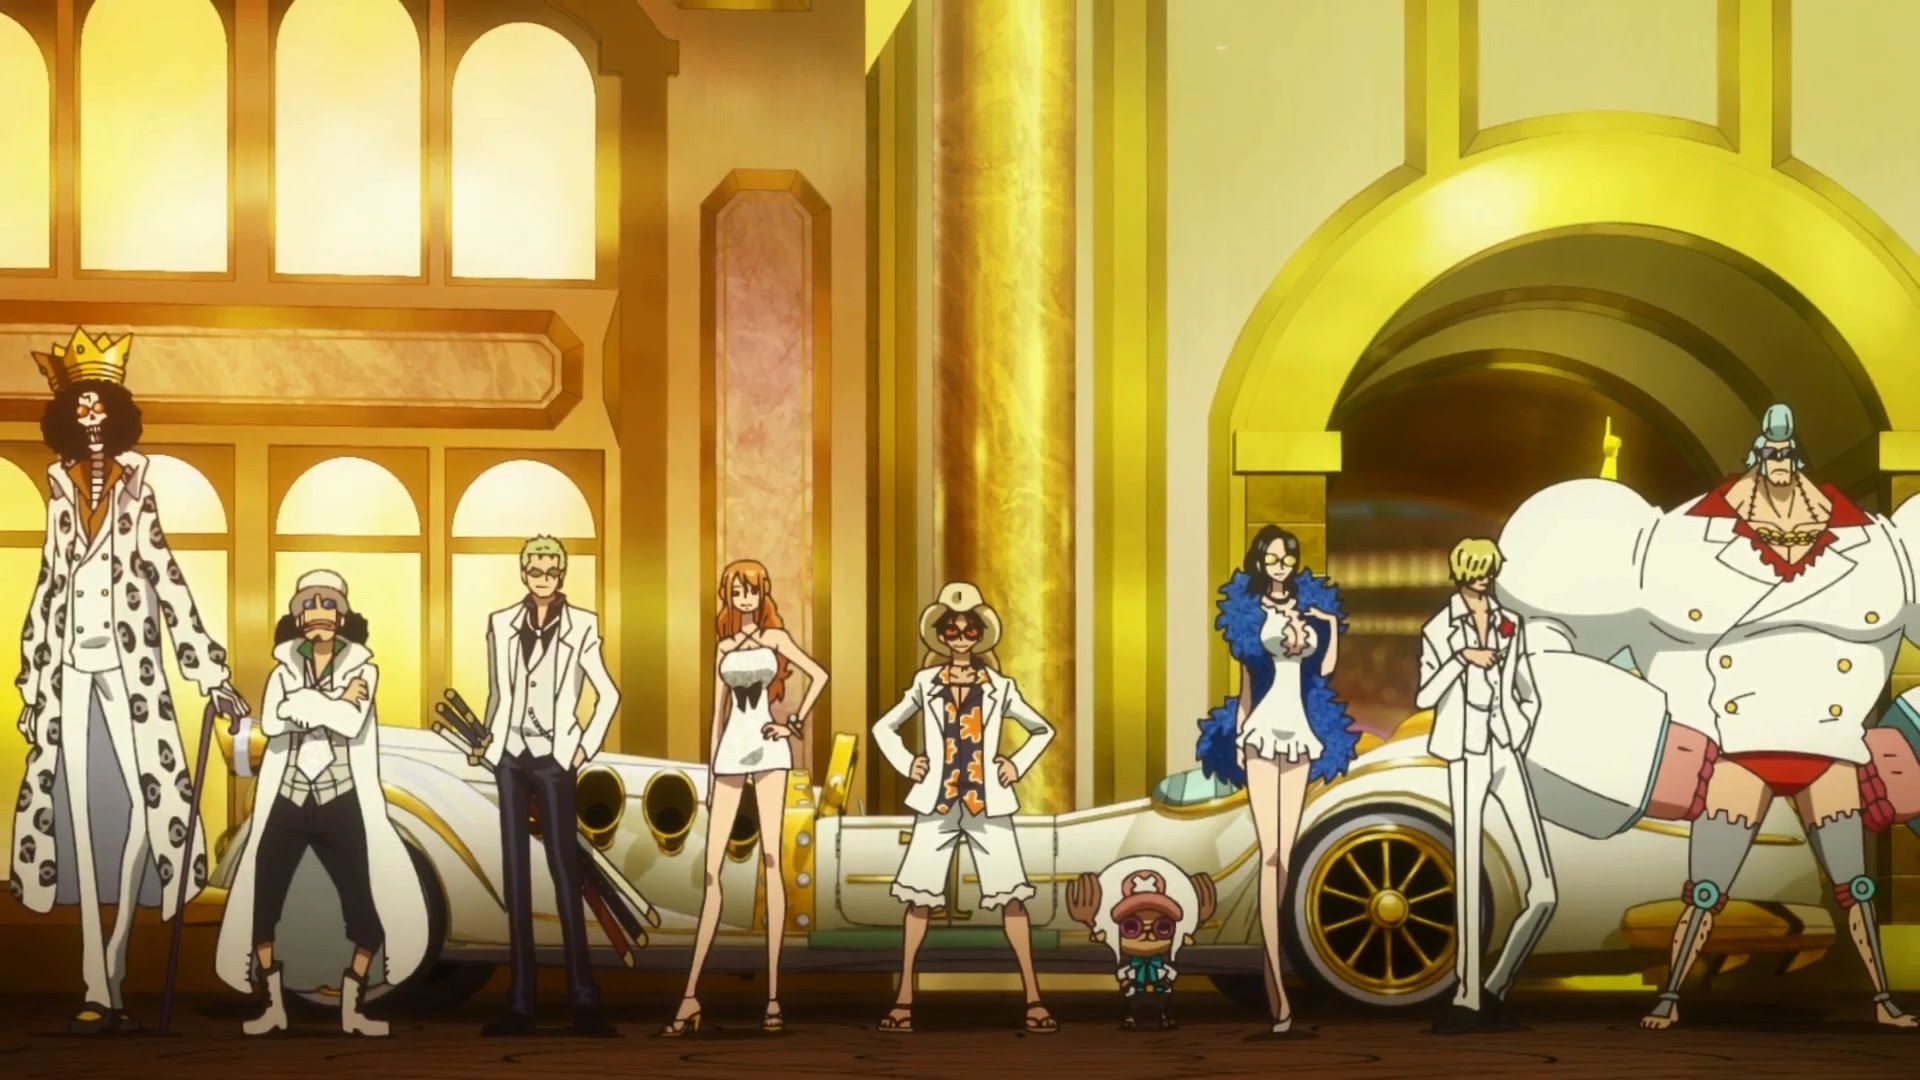 One Piece Gold Kino